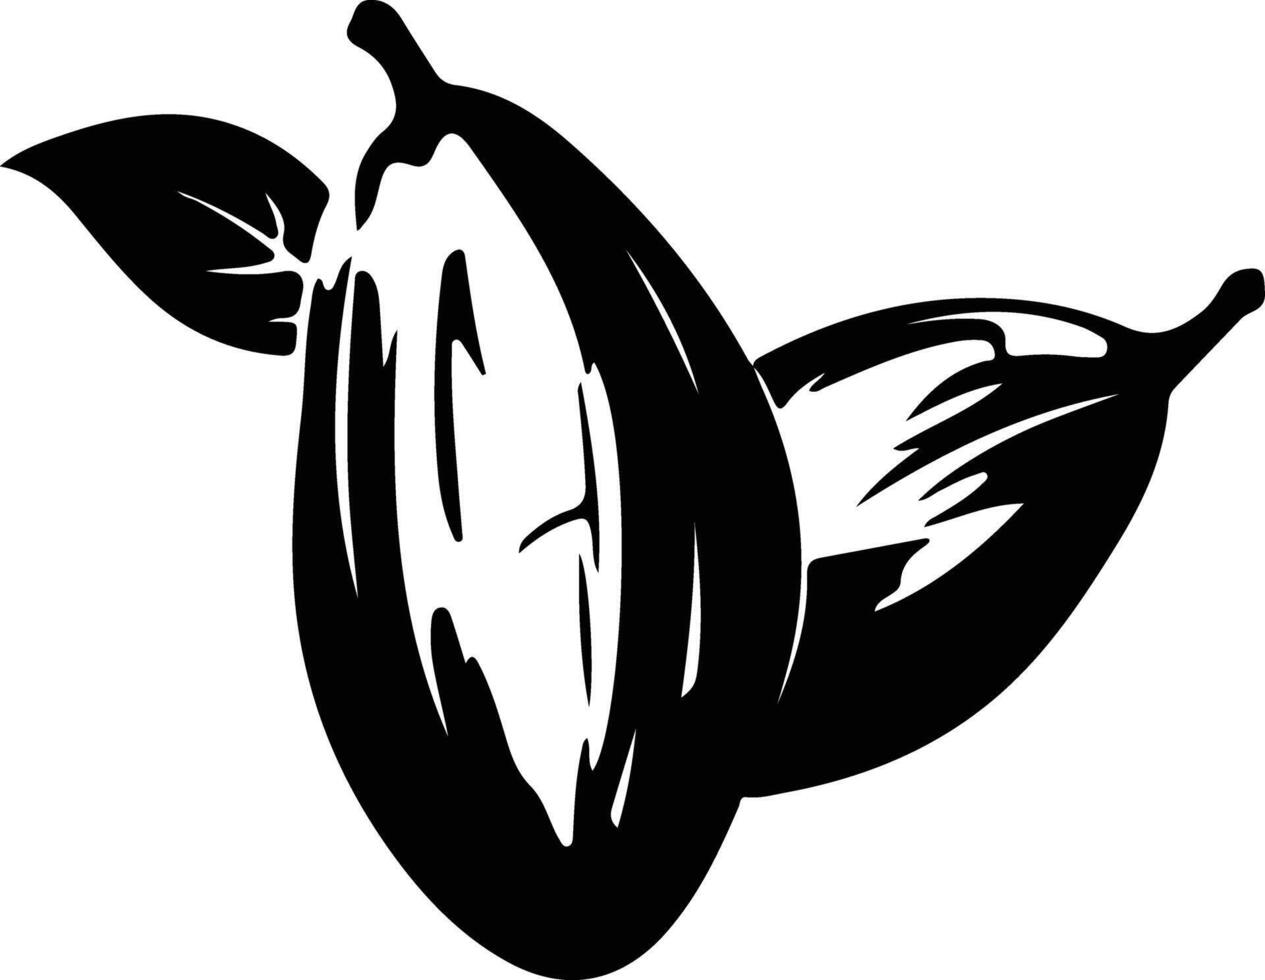 sweet potato  black silhouette vector